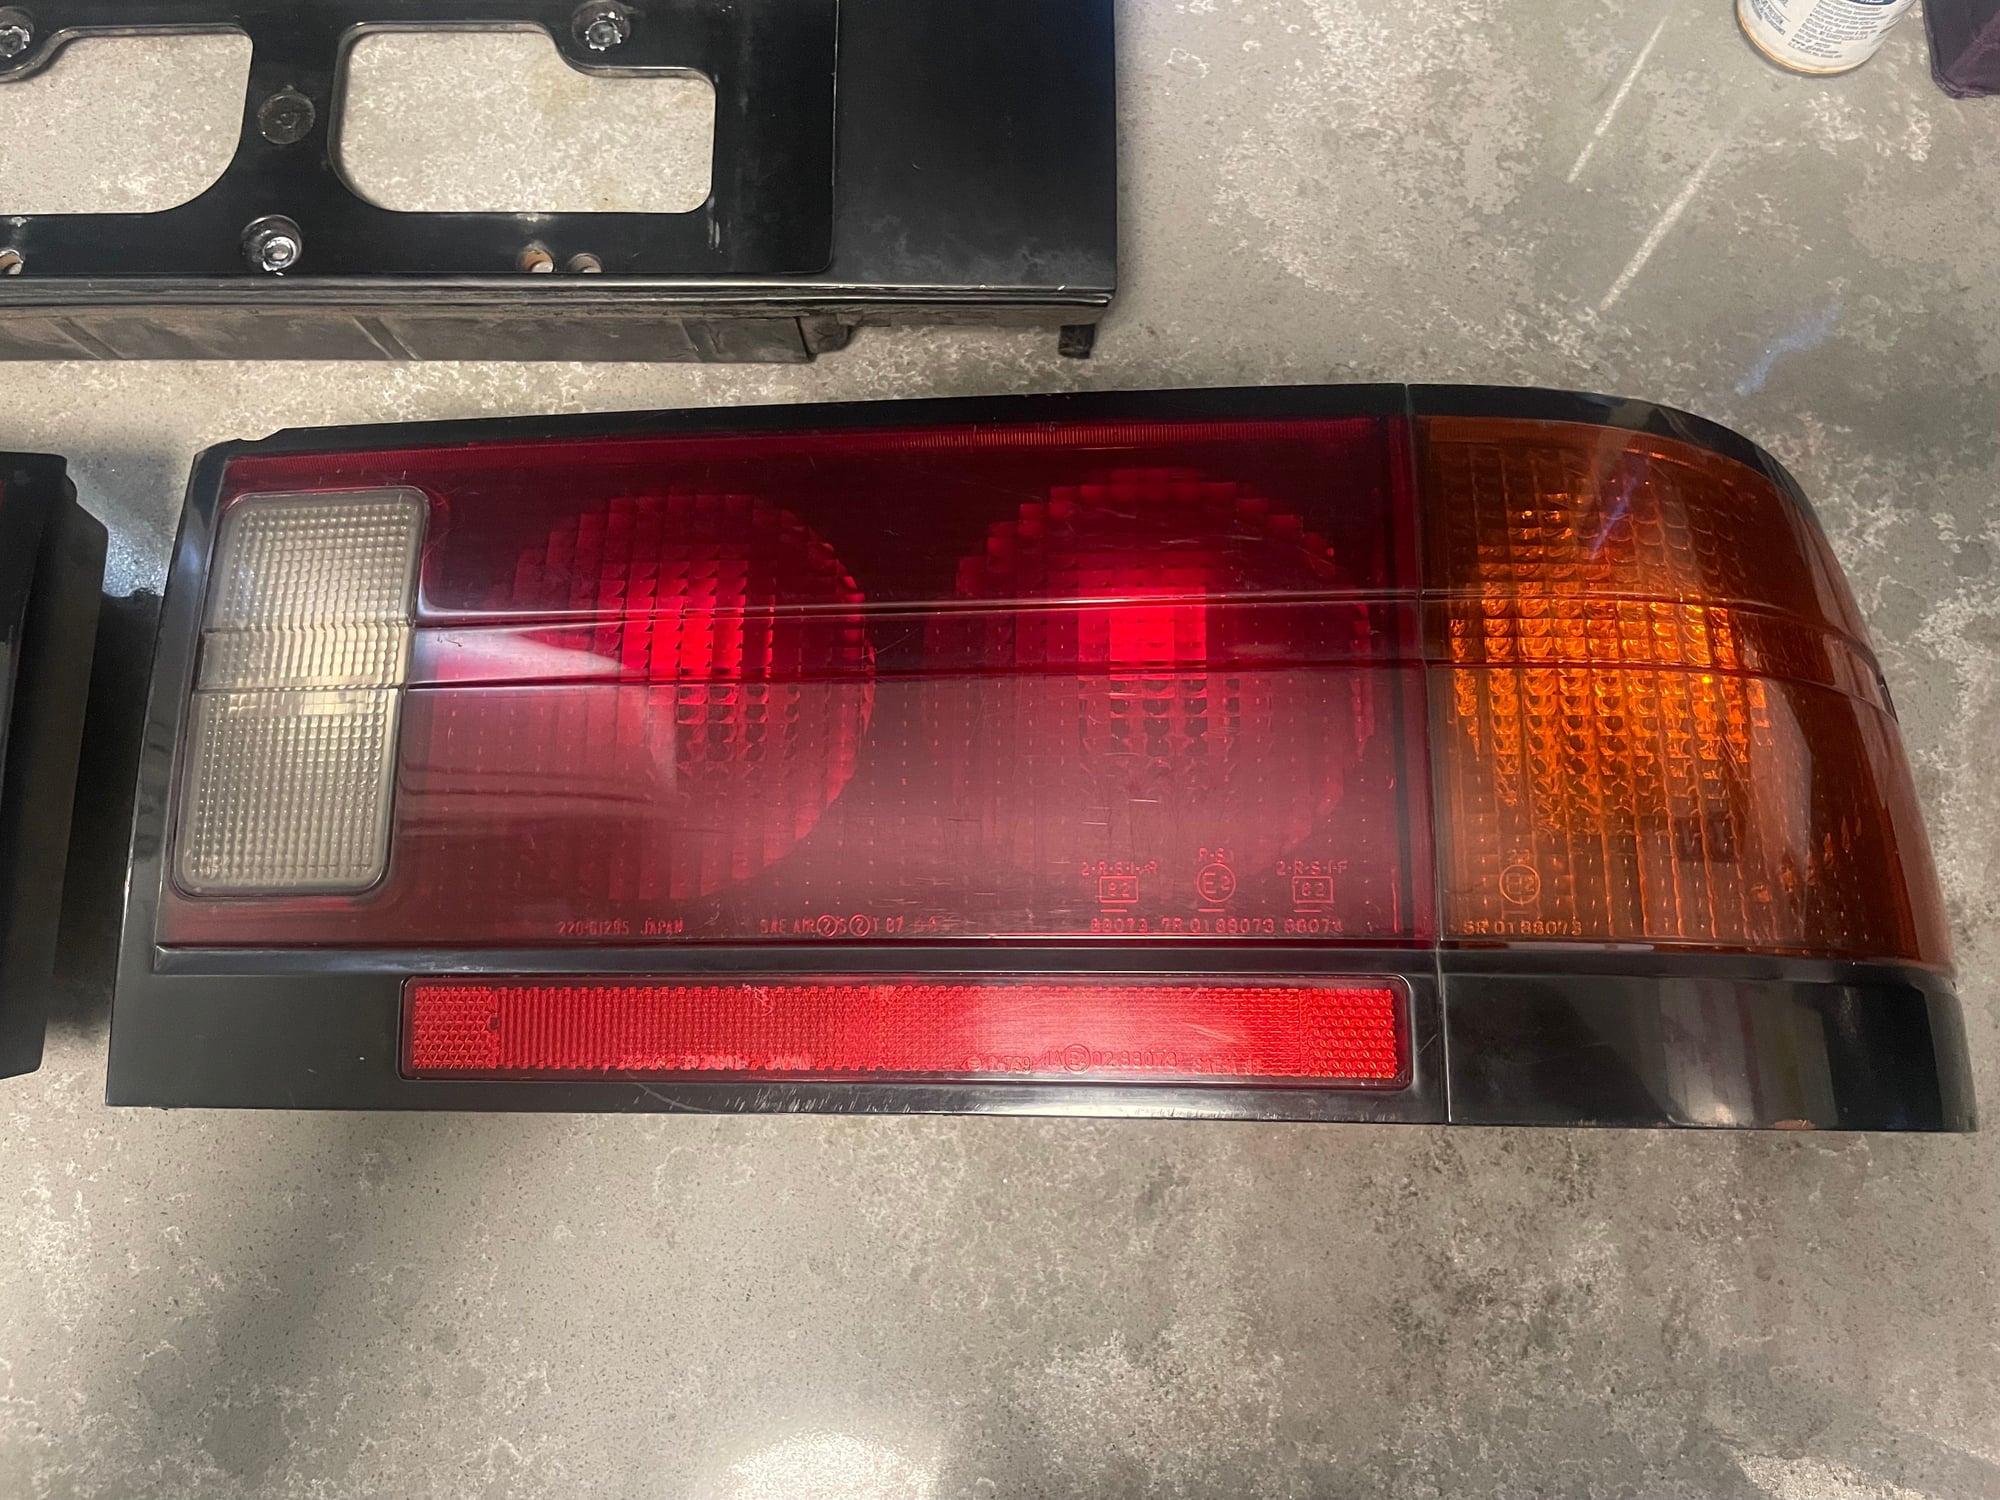 Lights - 86-91 S5 Round Taillights - Used - San Leandro, CA 94579, United States